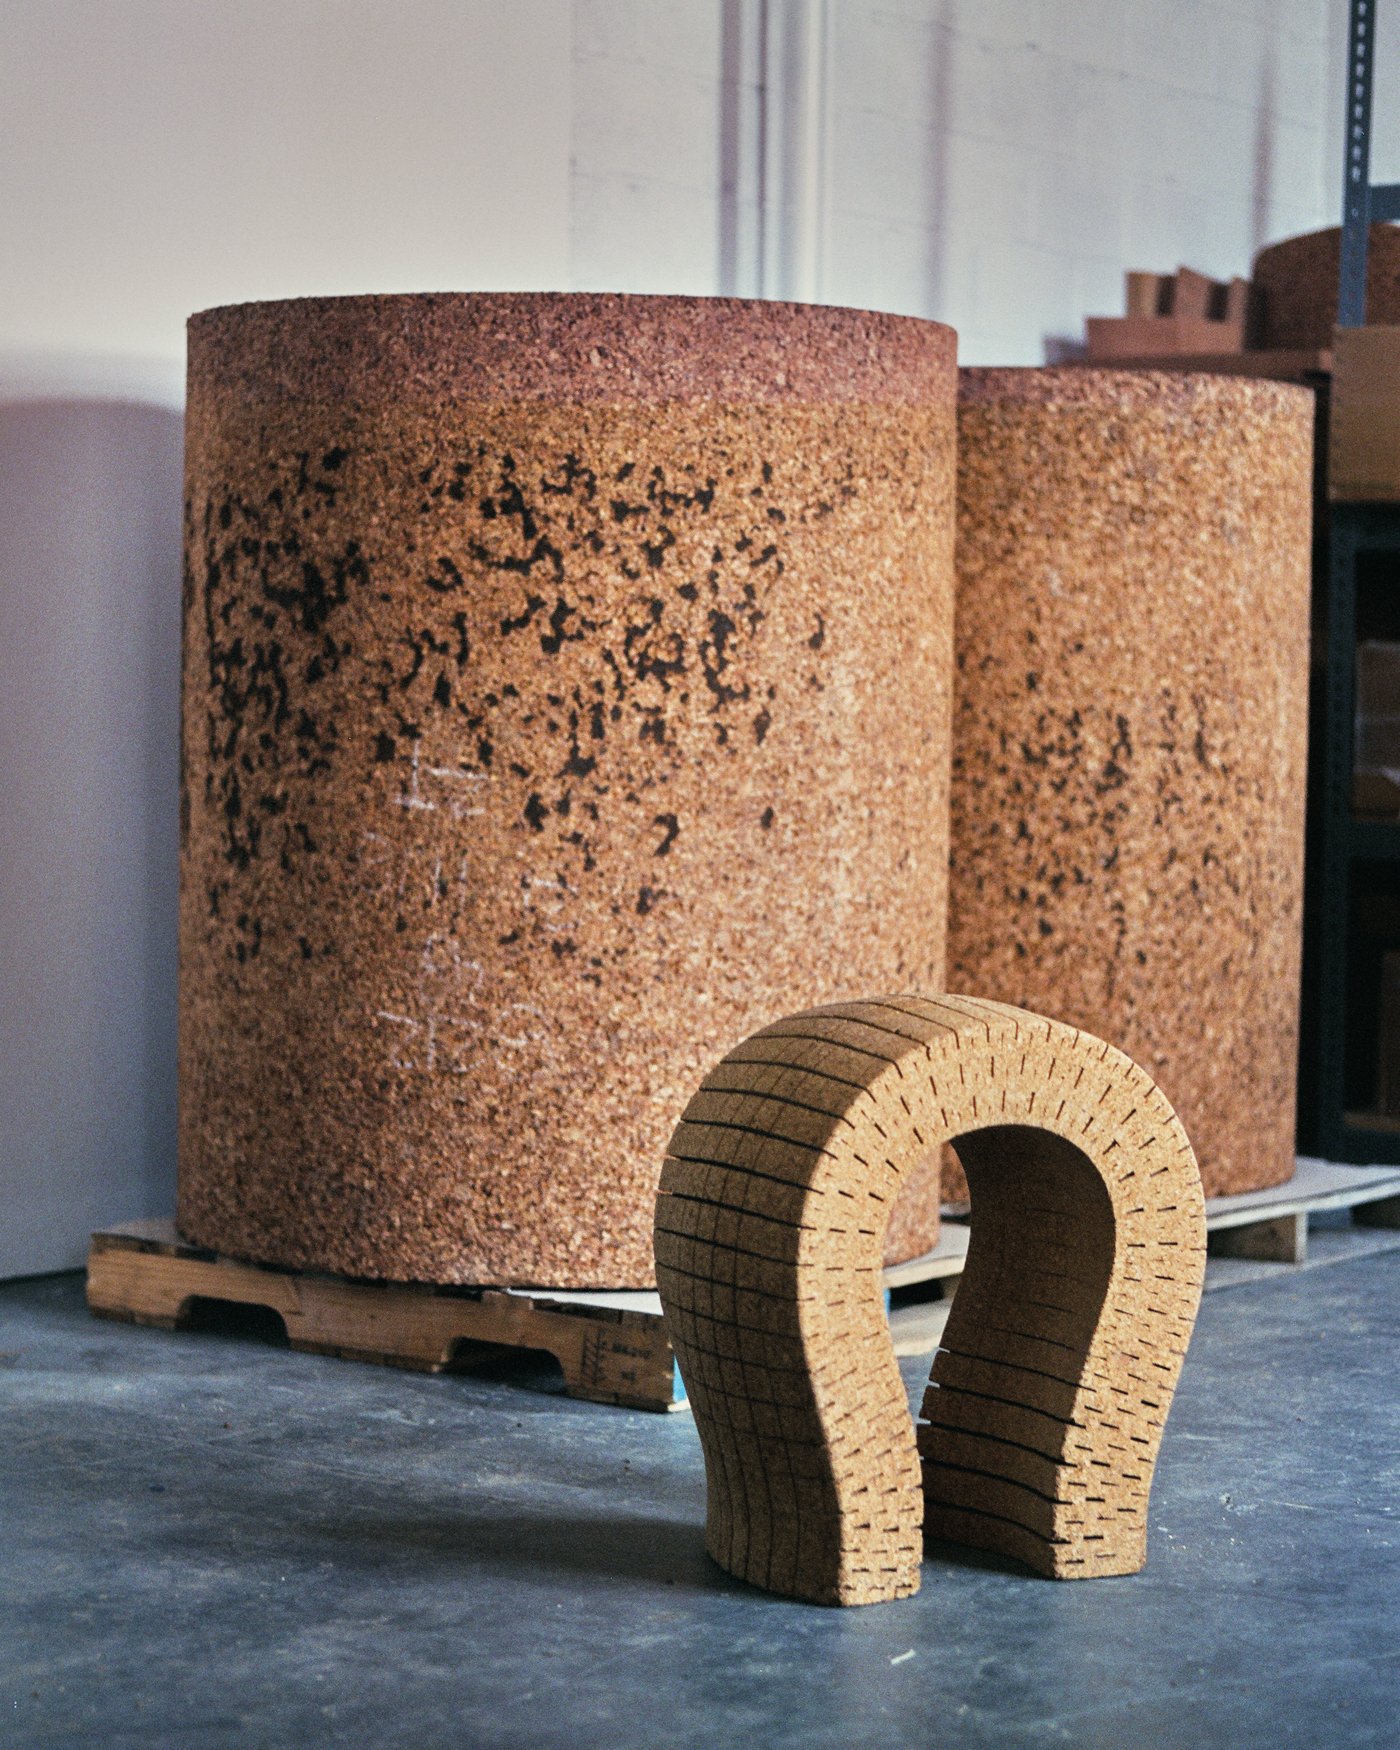 Sculptures made from cork